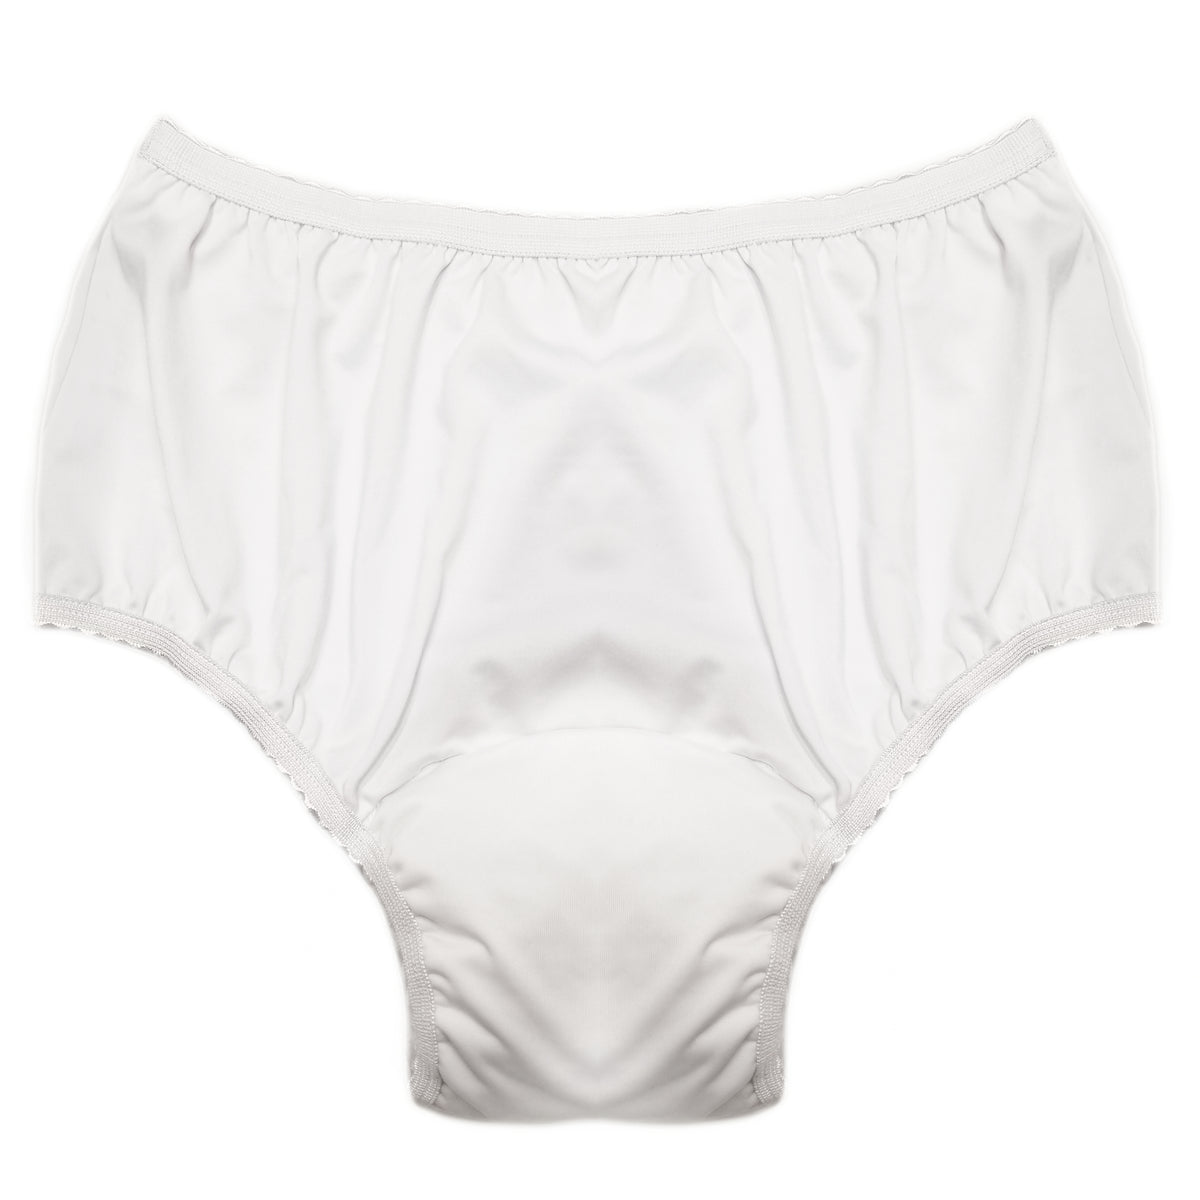 HealthDri Fancies Ladies Nylon Incontinence Panty, Size 8 White